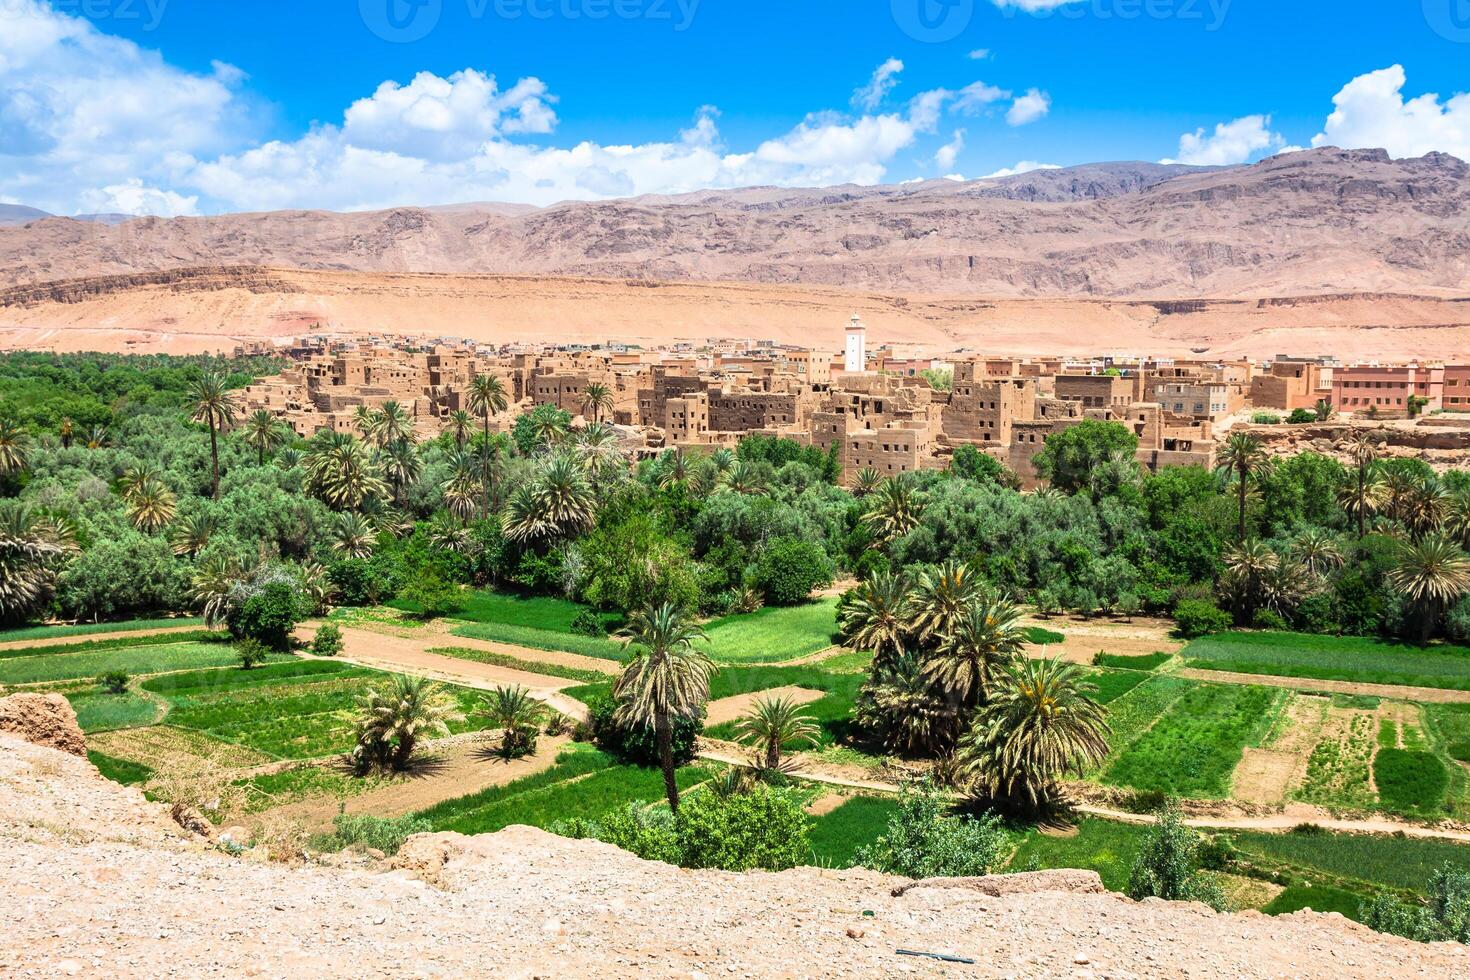 ville dans dades vallée, Maroc photo